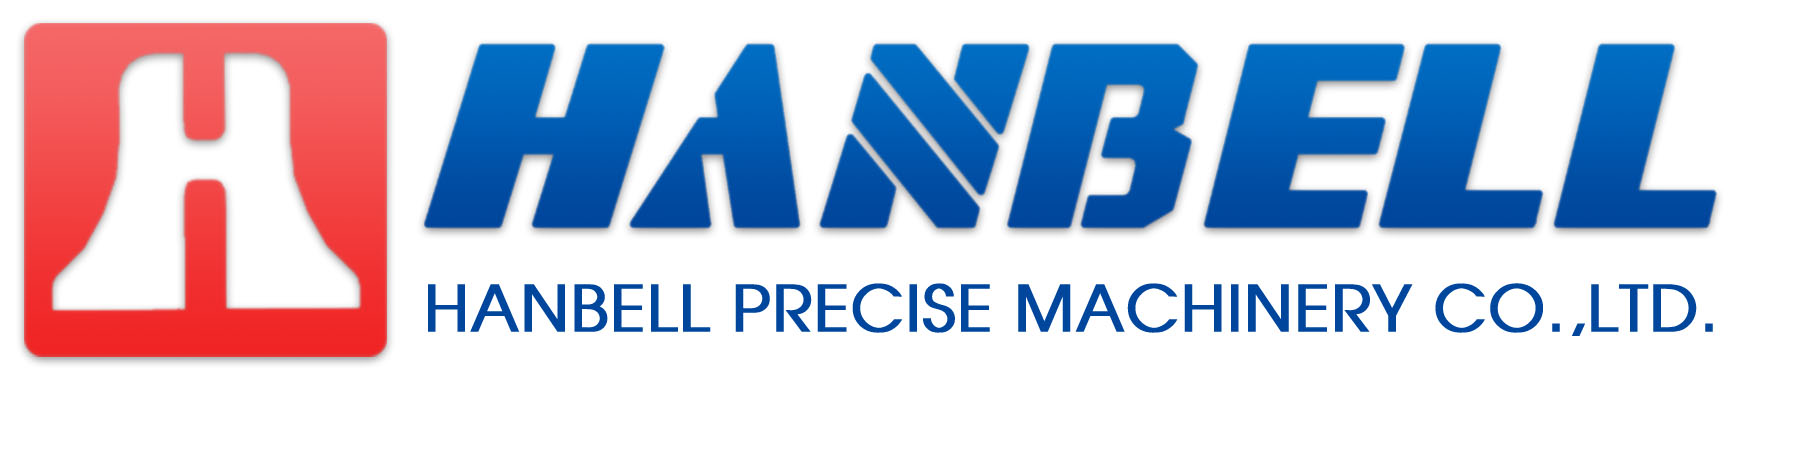 Hanbell Precise Machinery CO., Ltd.